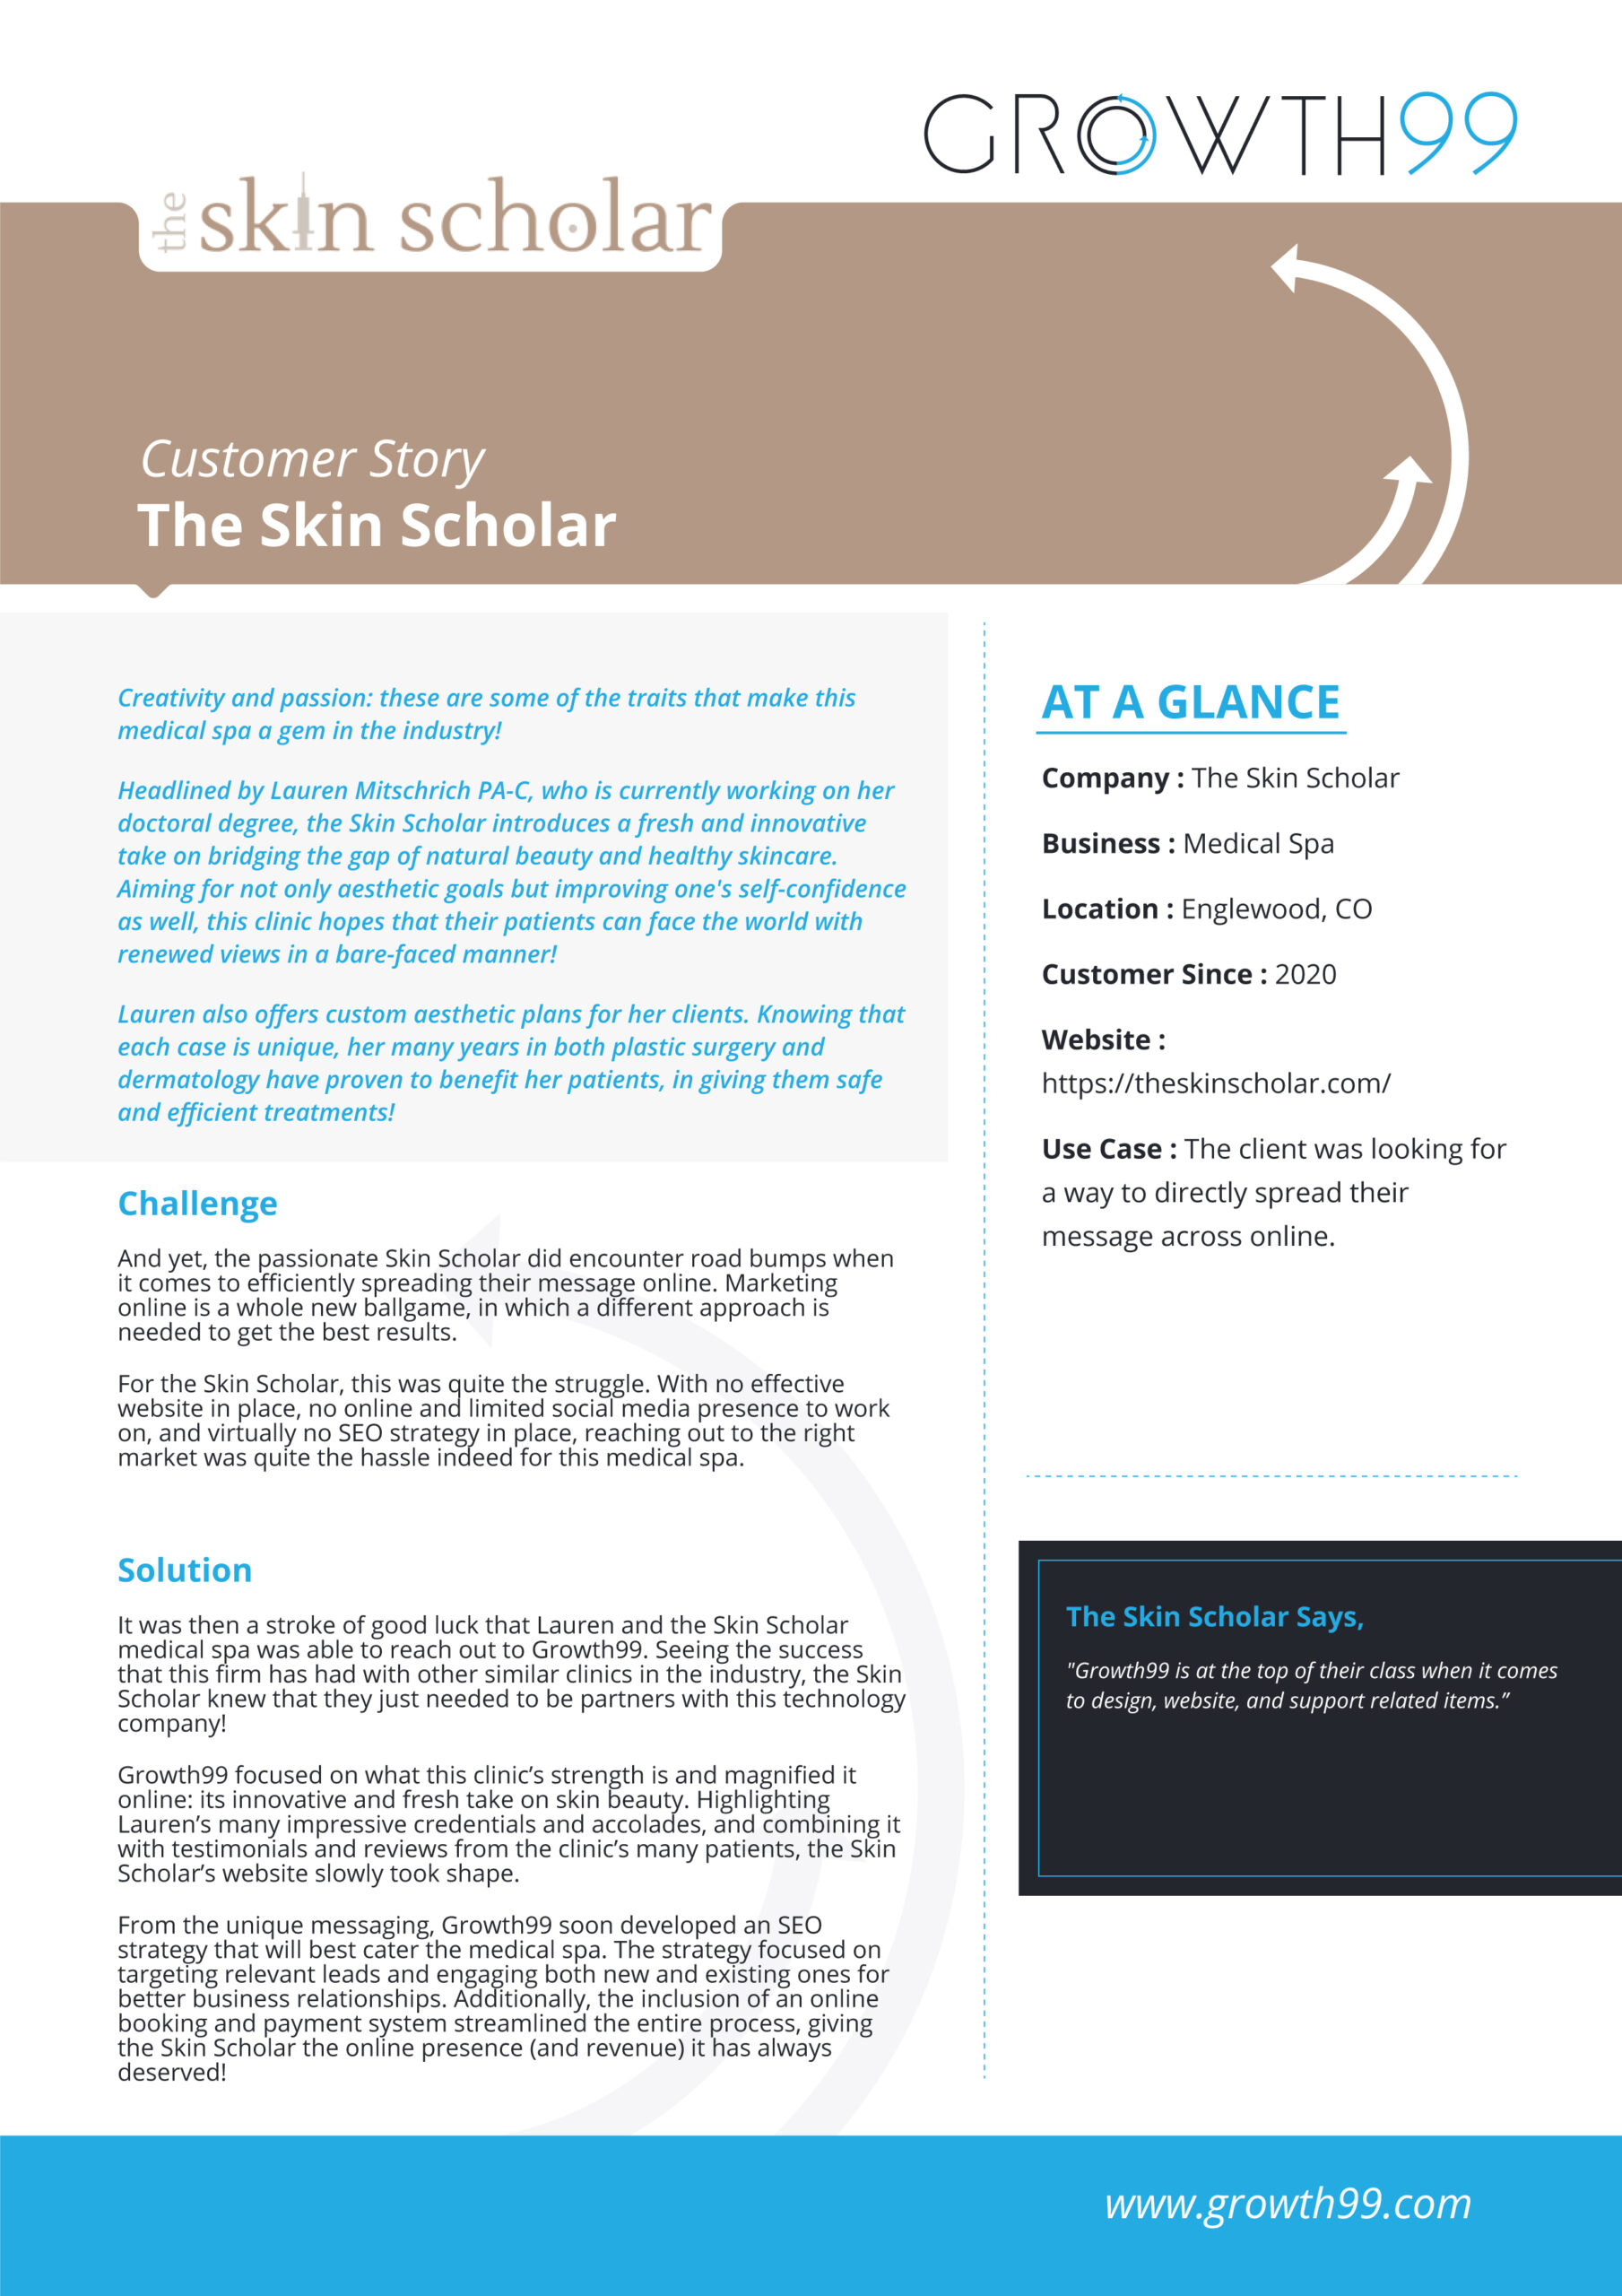 The Skin Scholar Case Study